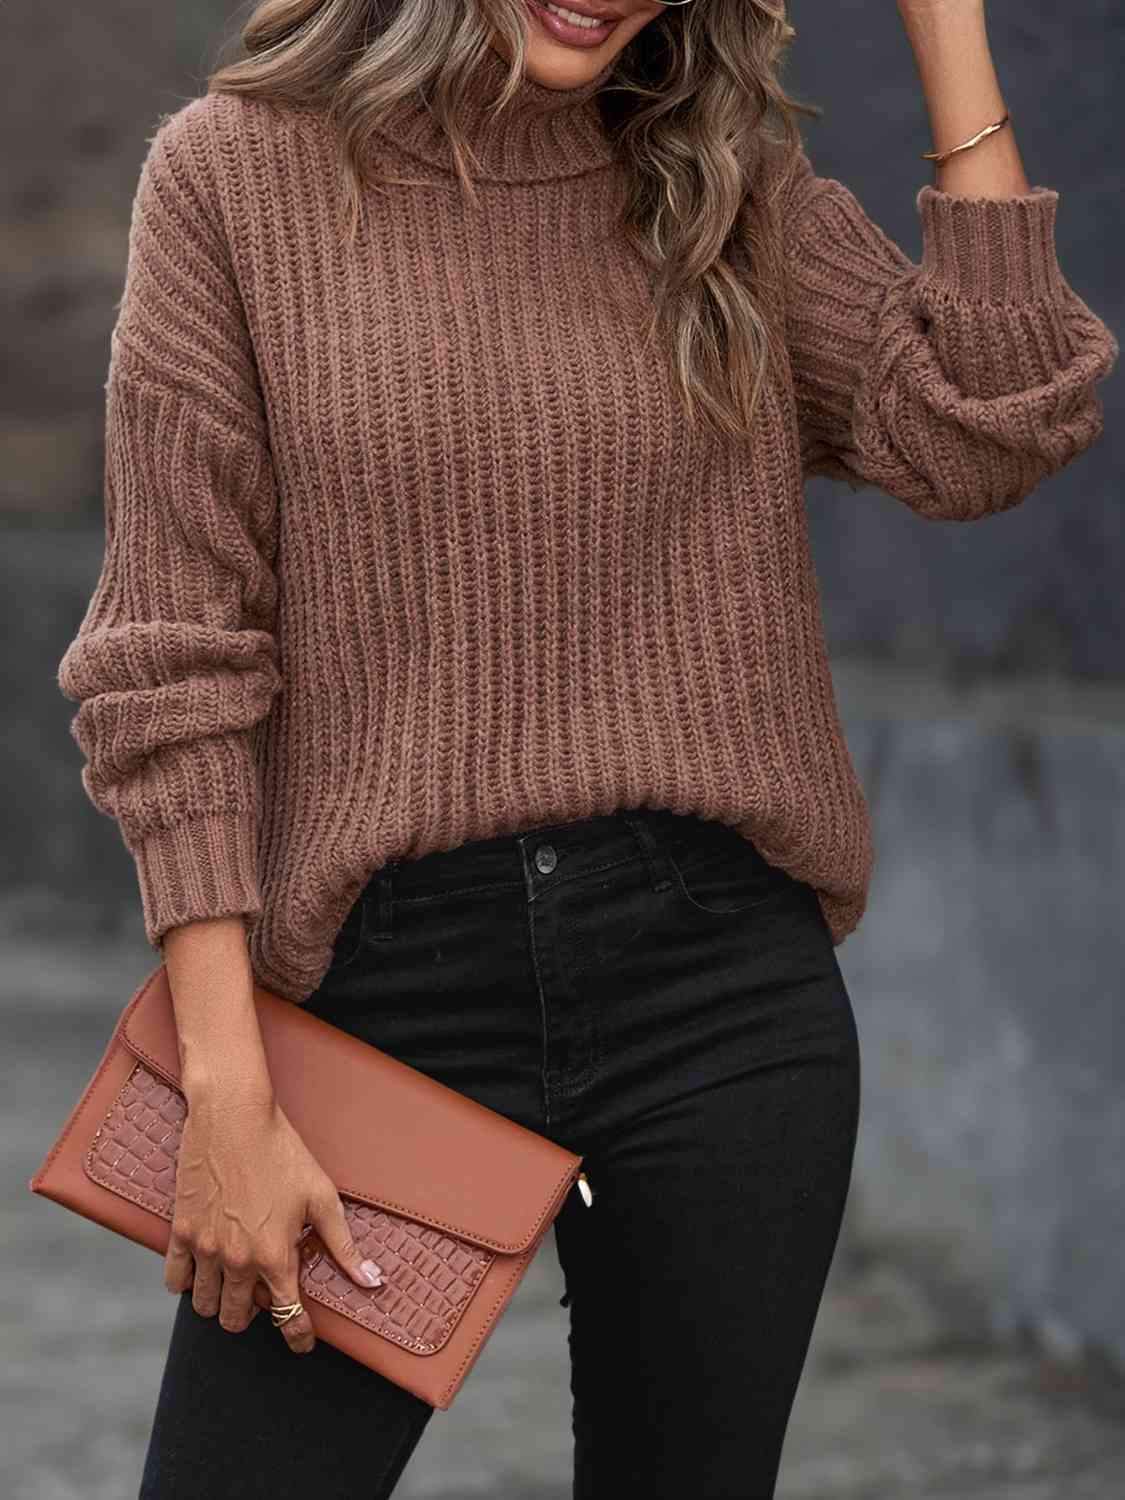 Dim Gray Turtleneck Rib-Knit Sweater Sentient Beauty Fashions Apparel & Accessories